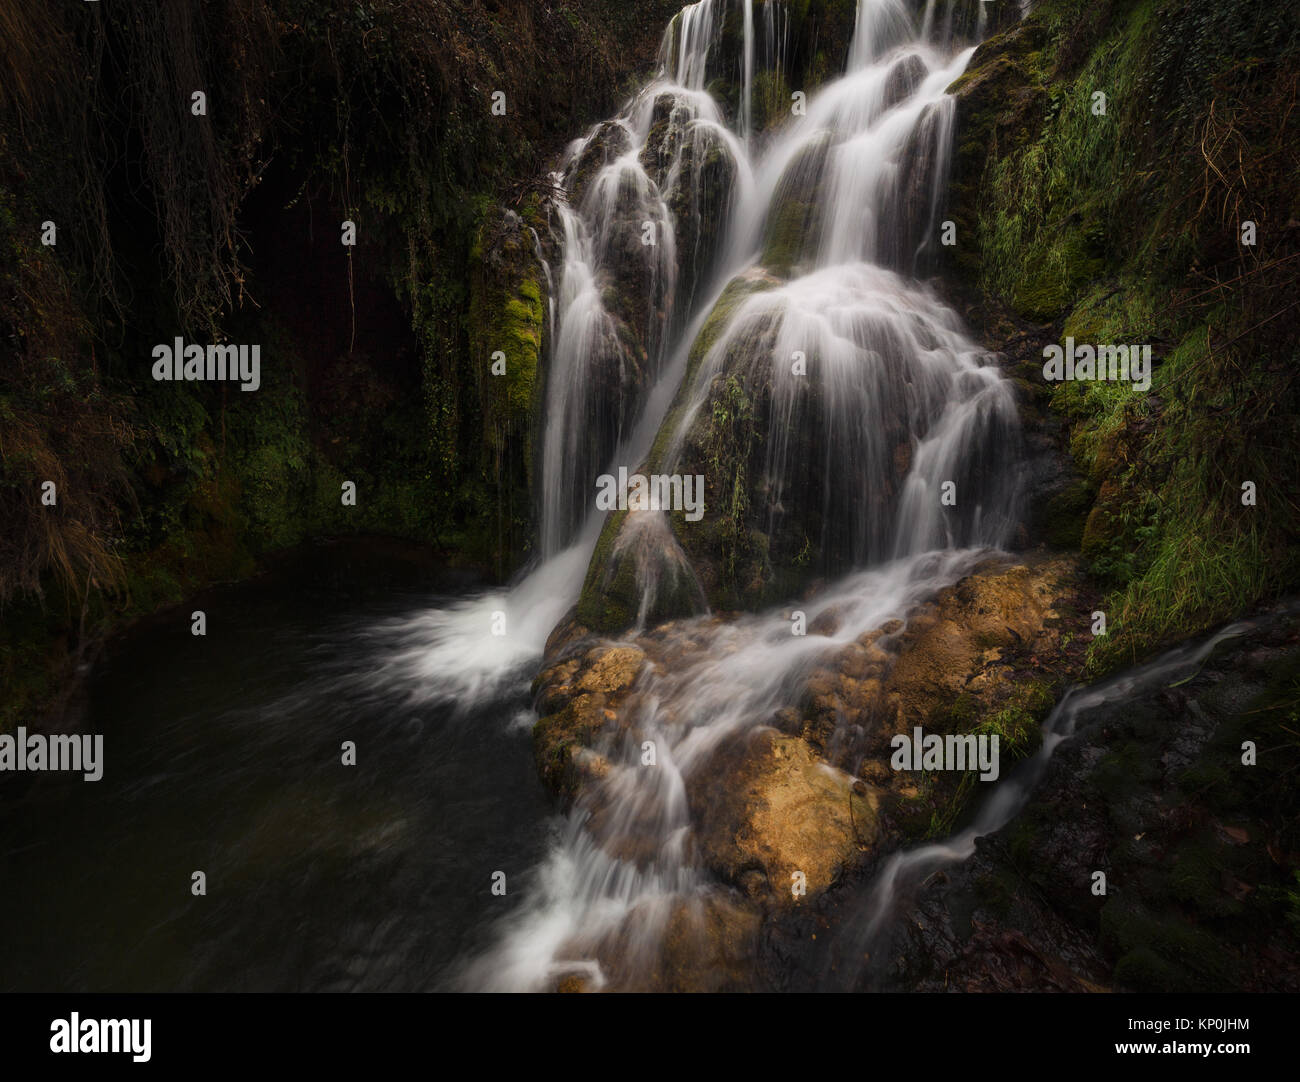 Water in motion at Tobera waterfall in Burgos Stock Photo